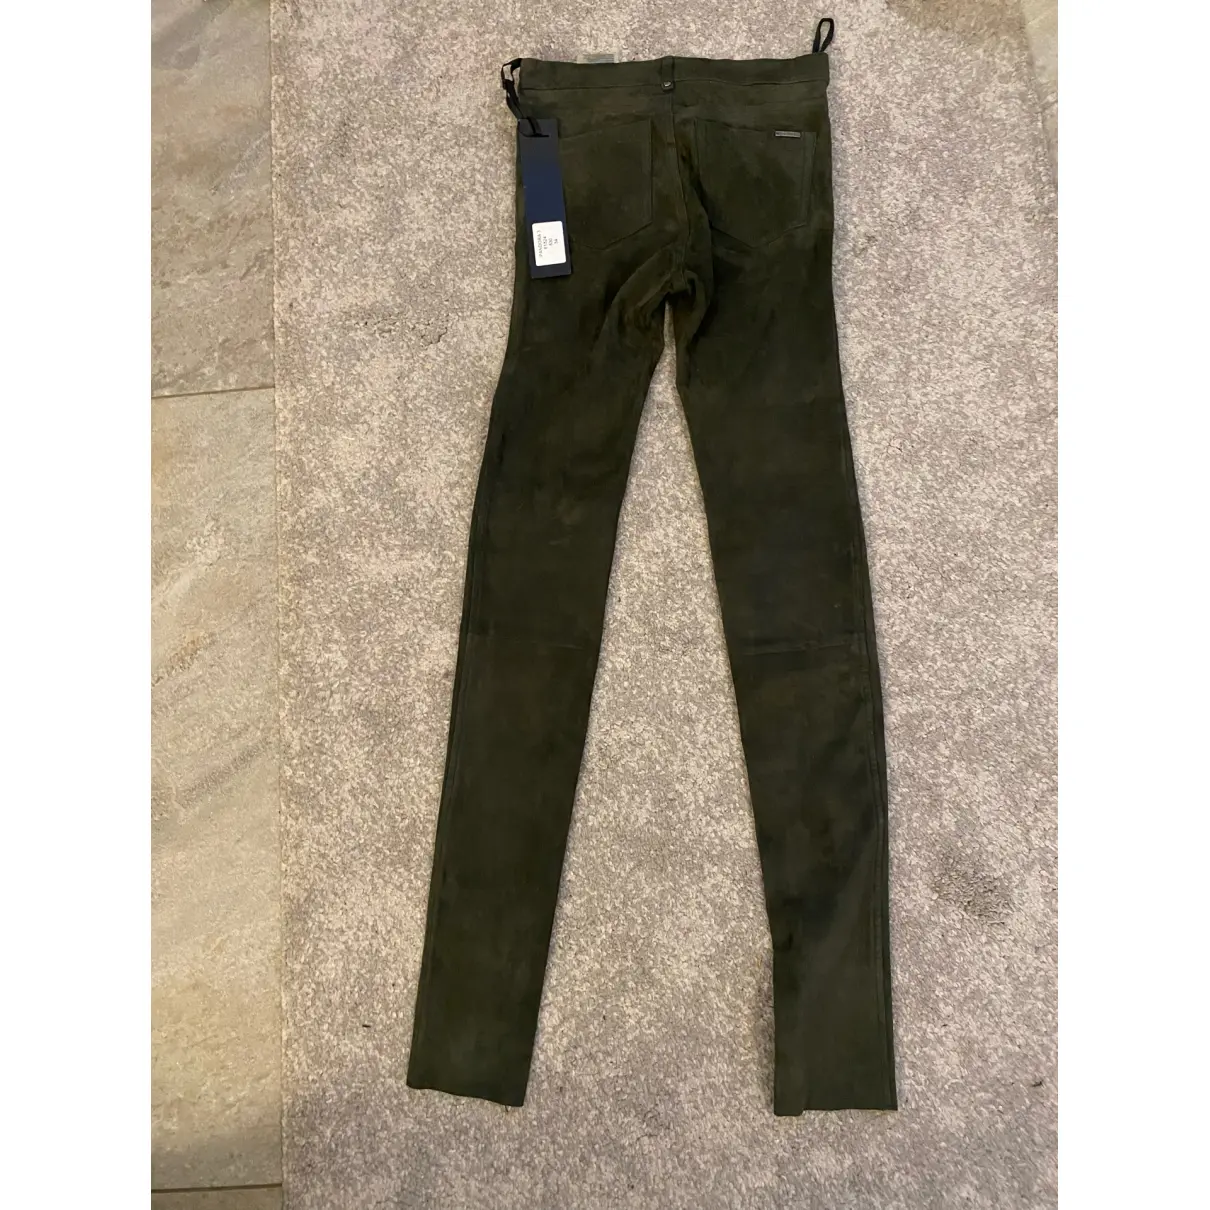 Buy Oakwood Leather slim pants online